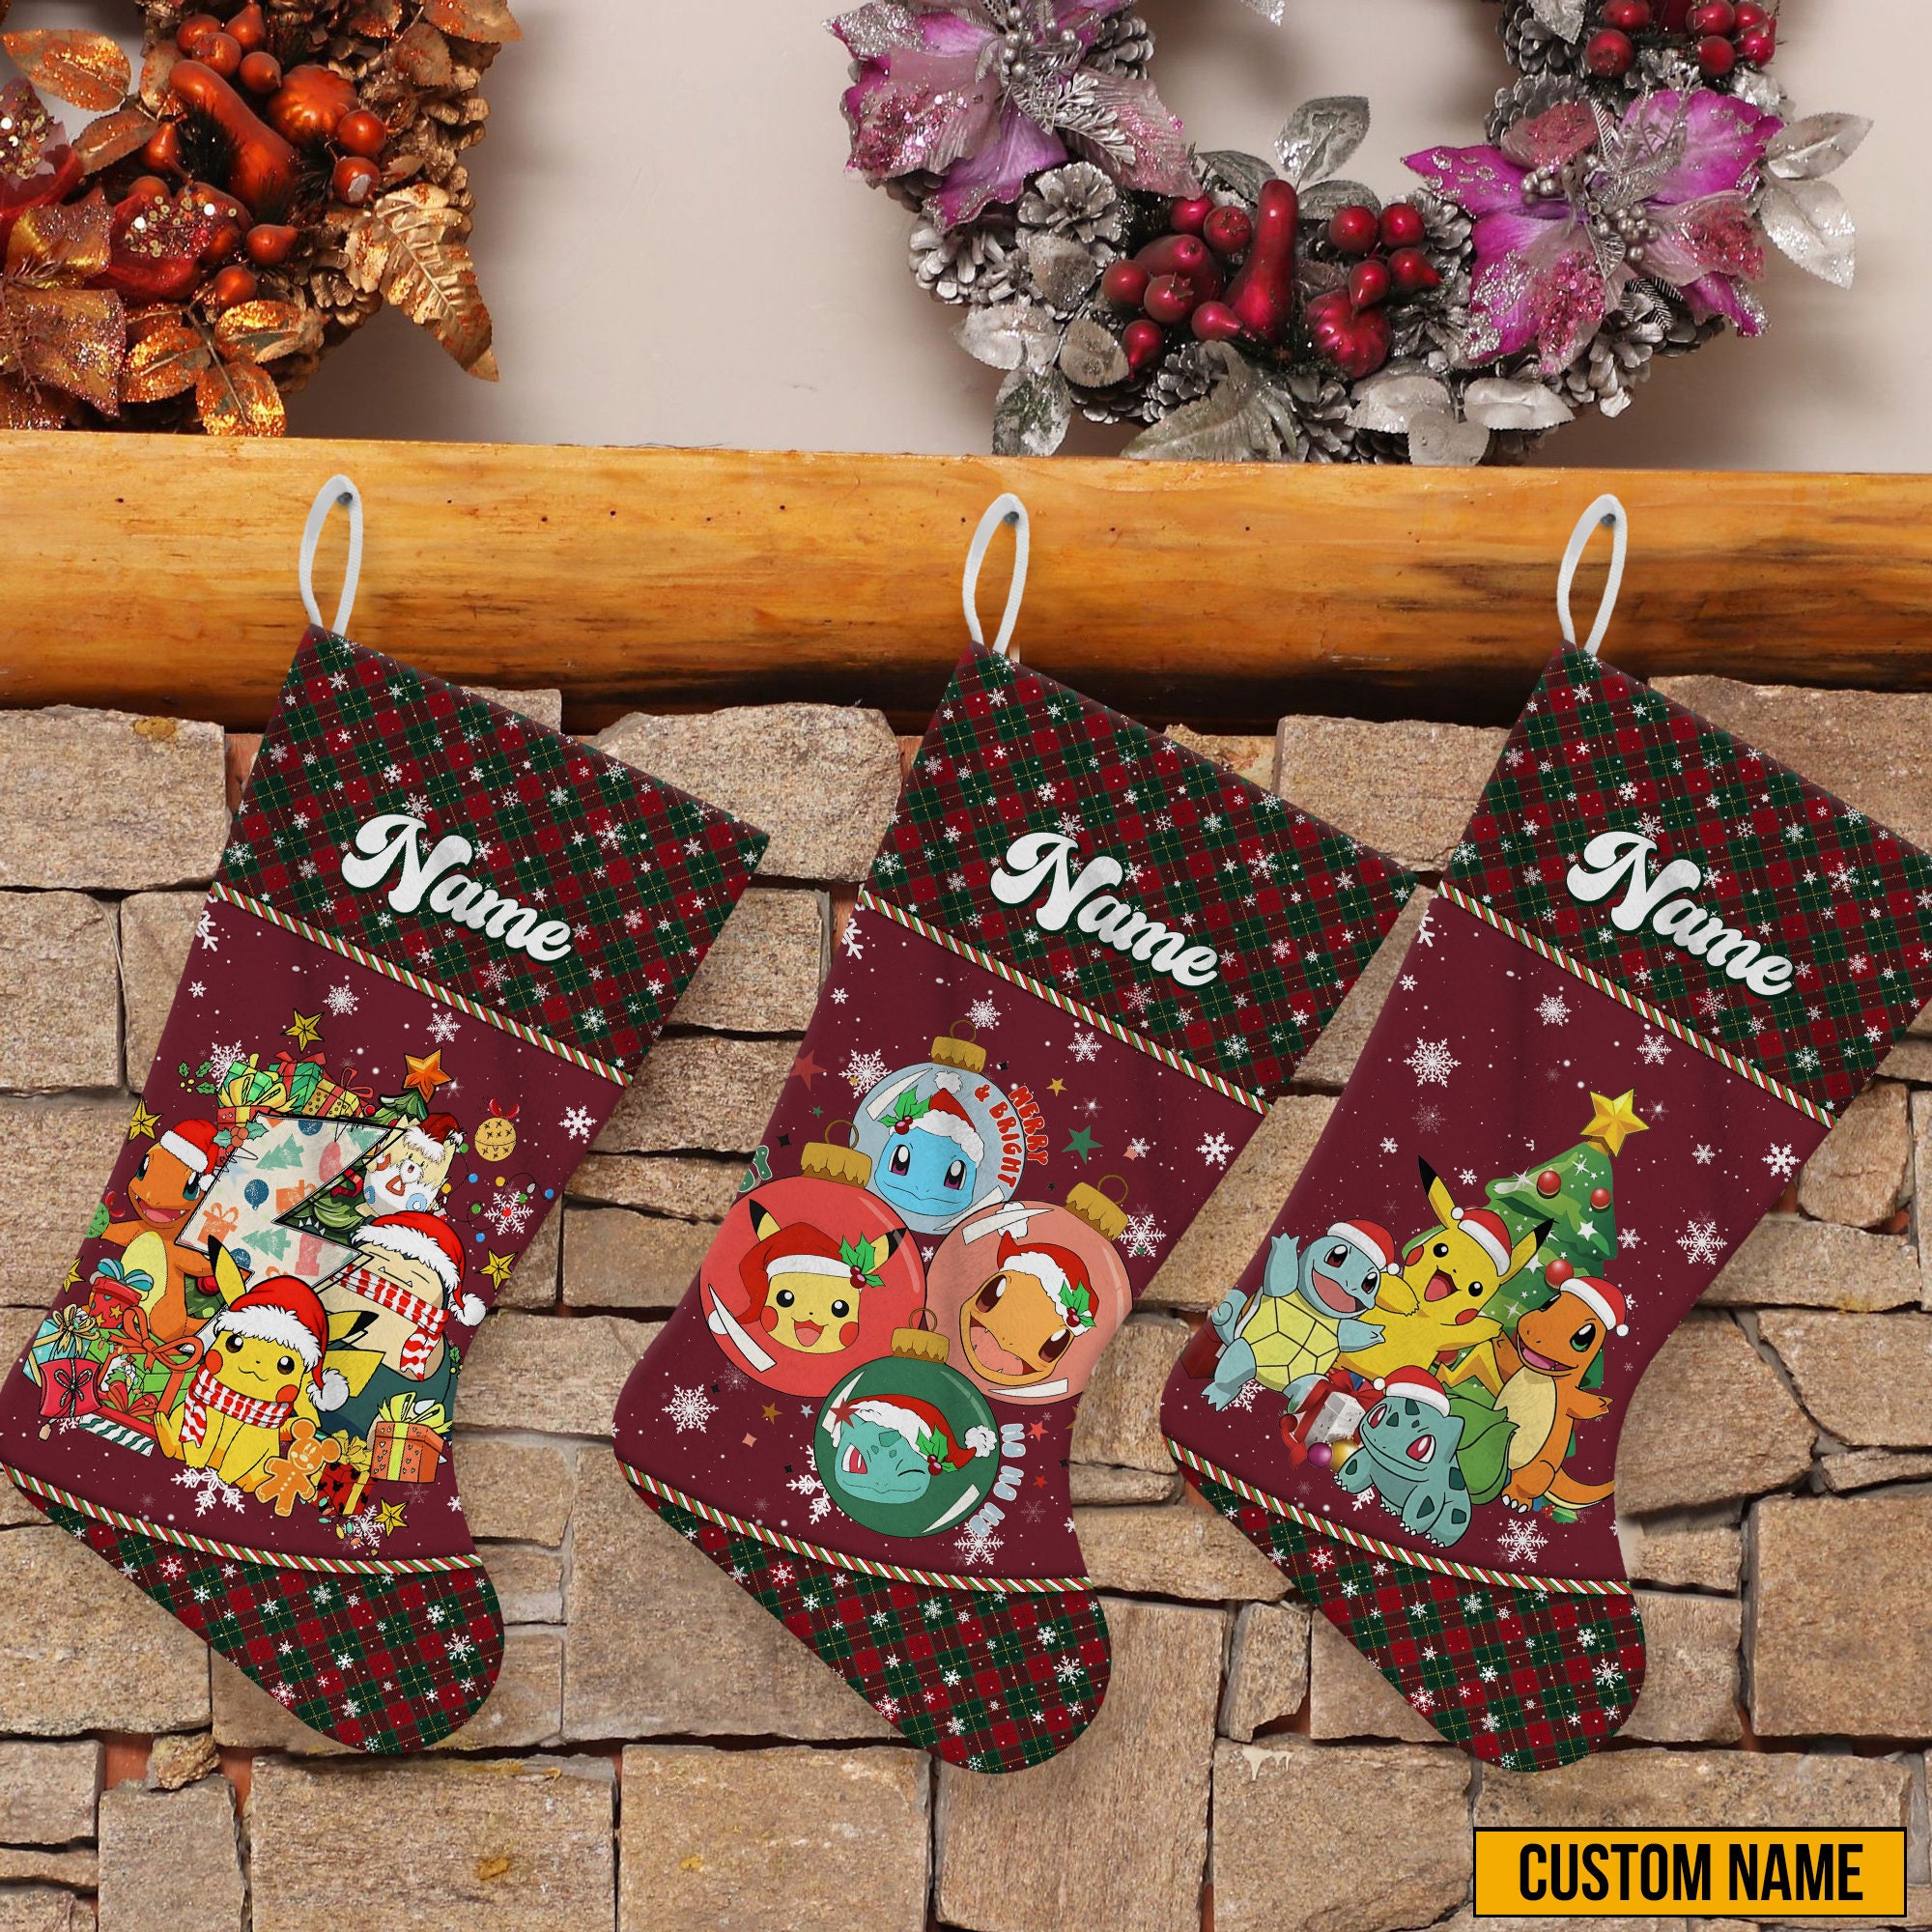 Needlepoint Christmas Stockings Personalize Your Holiday Decor 